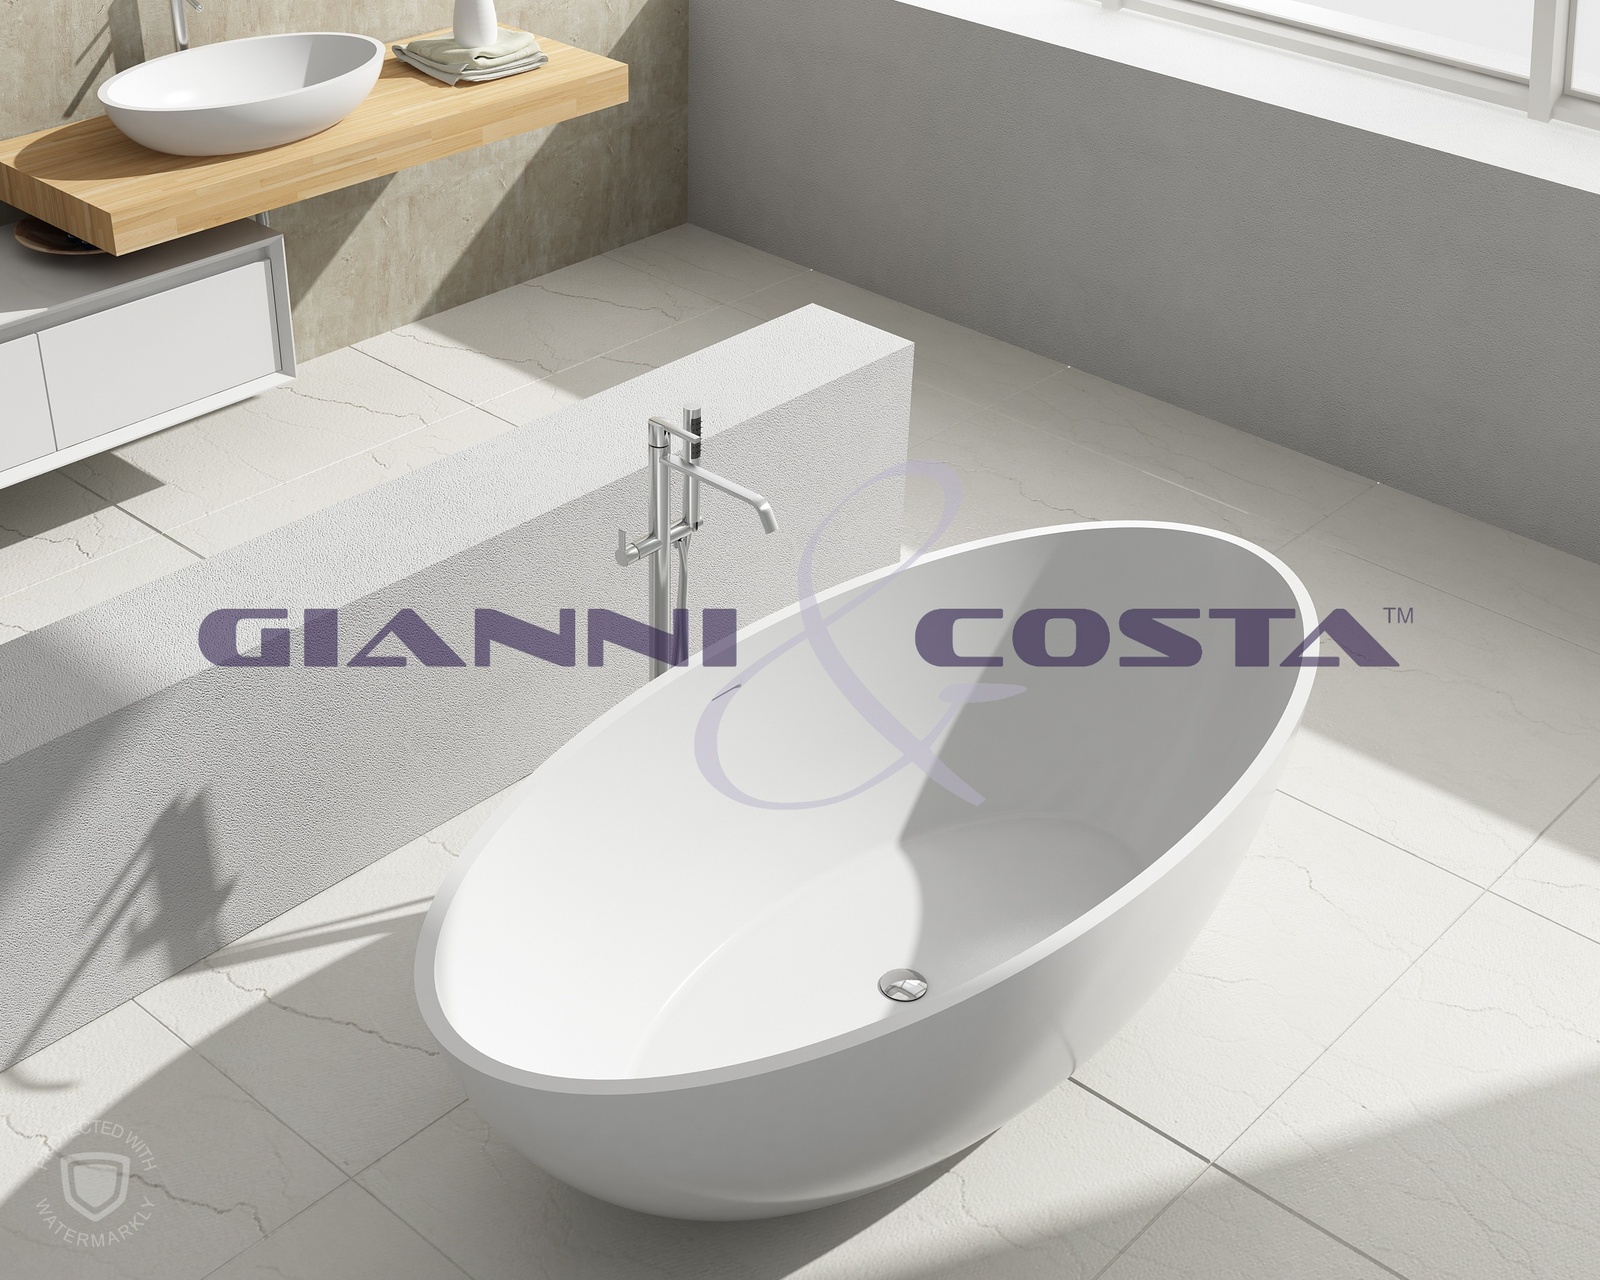 Solid Surface Free Standing Bath Tub - Matt White - Model Isola GC1057 1800mm